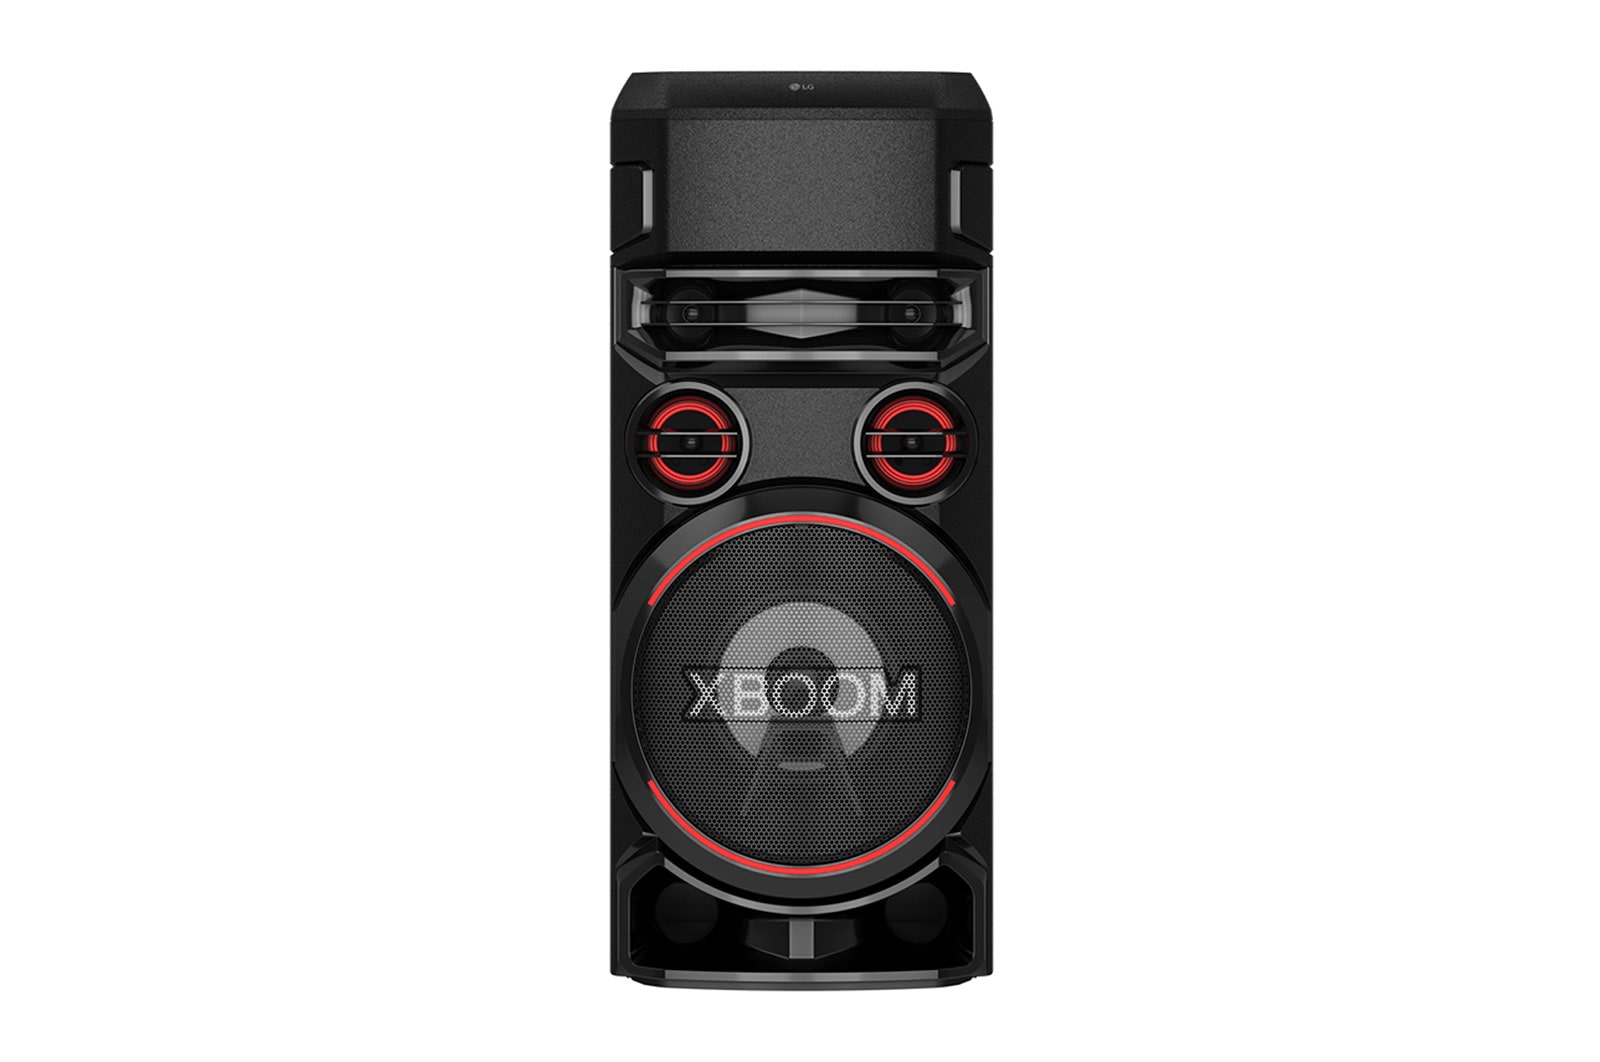 LG Caixa Acústica LG Xboom RN7 MultI Bluetooth USB HDMI Super Graves Entrada de Microfone e Guitarra Karaokê, RN7